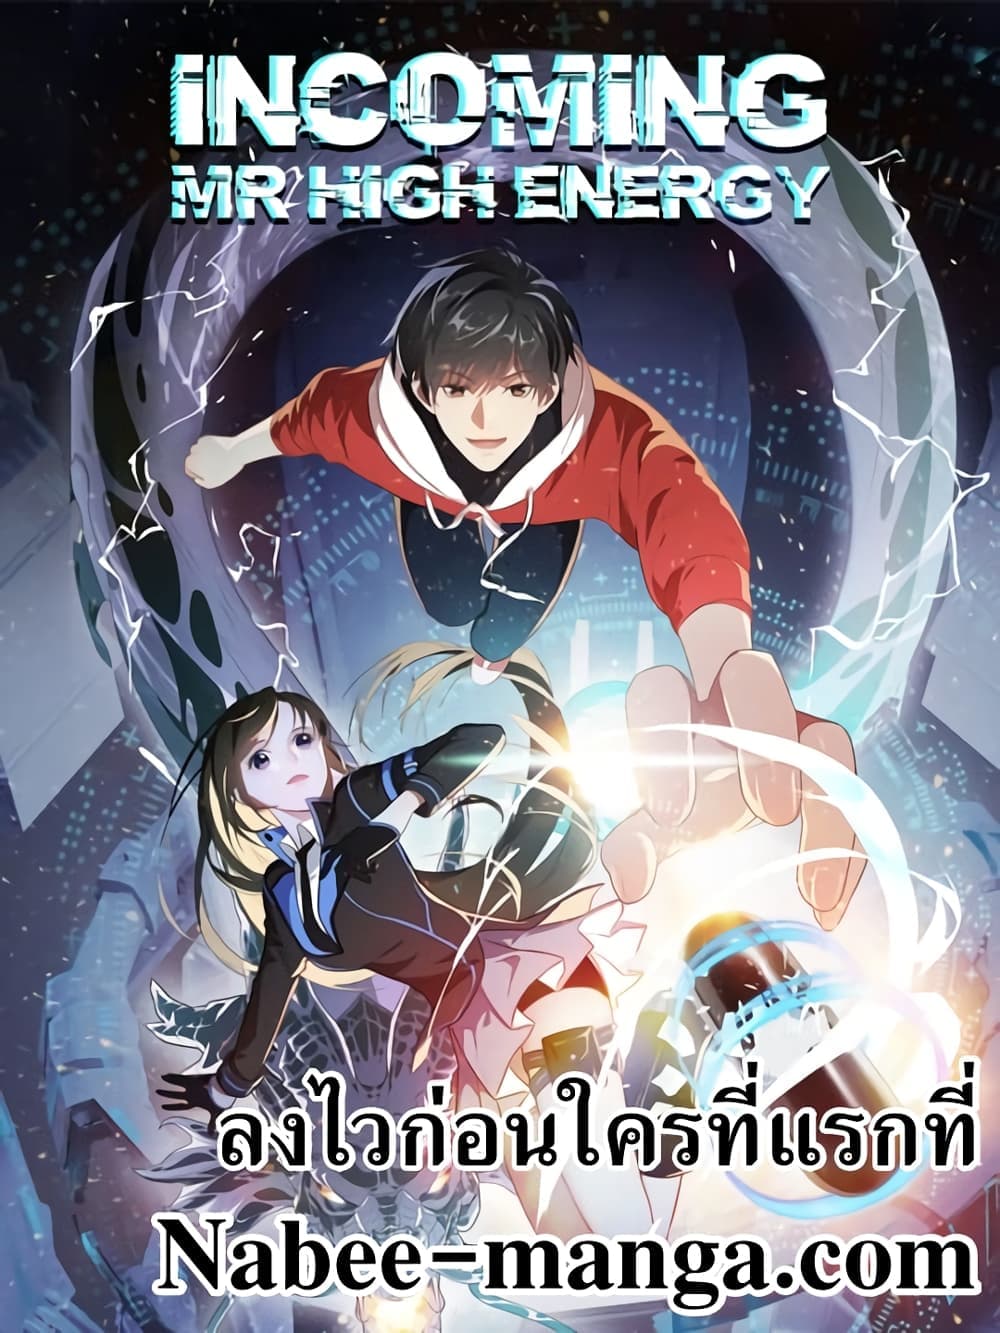 High Energy Strikes à¸à¸­à¸à¸à¸µà¹ 230 (1)